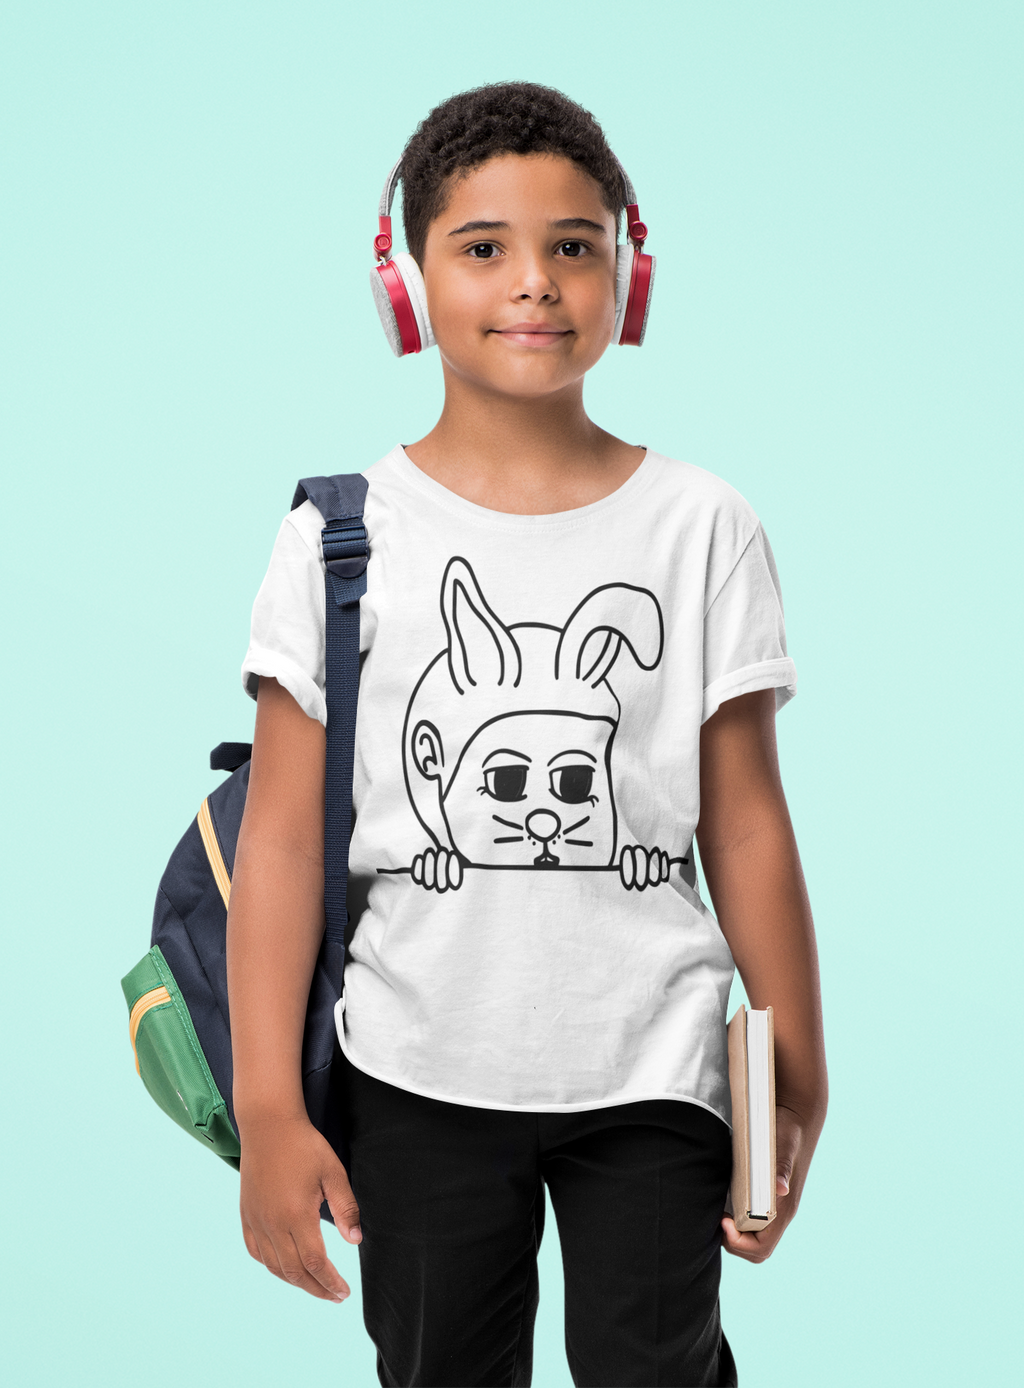 t-shirt-mockup-of-a-kid-with-school-articles-standing-at-a-studio-44445-r-el2